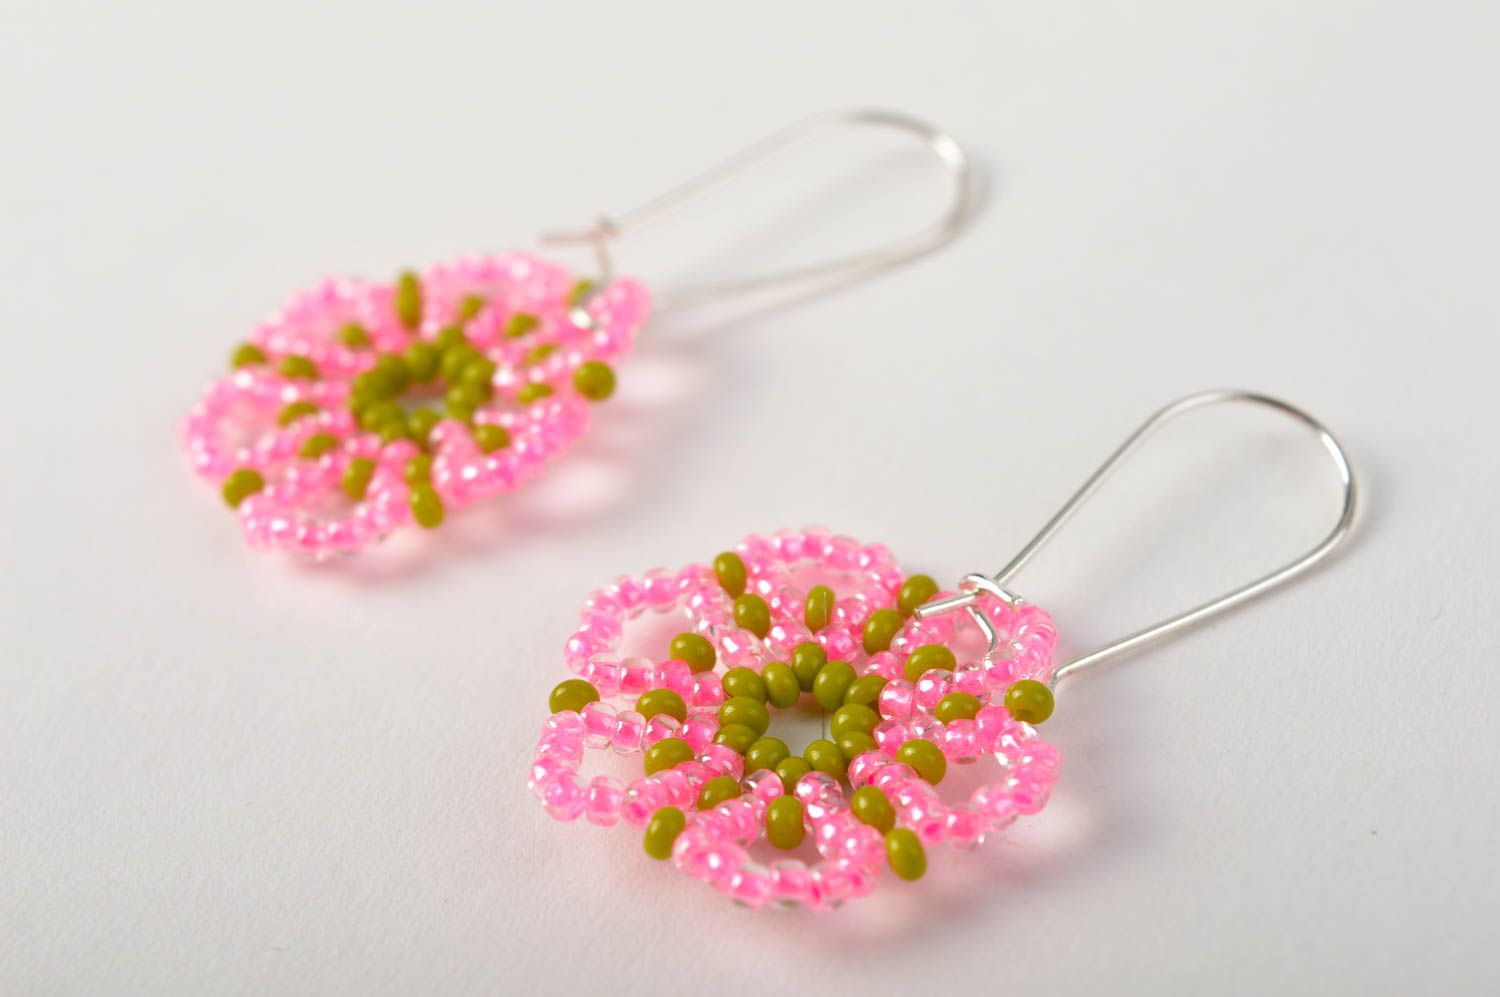 Handmade beaded flower earrings costume jewelry designs fashion trends photo 2